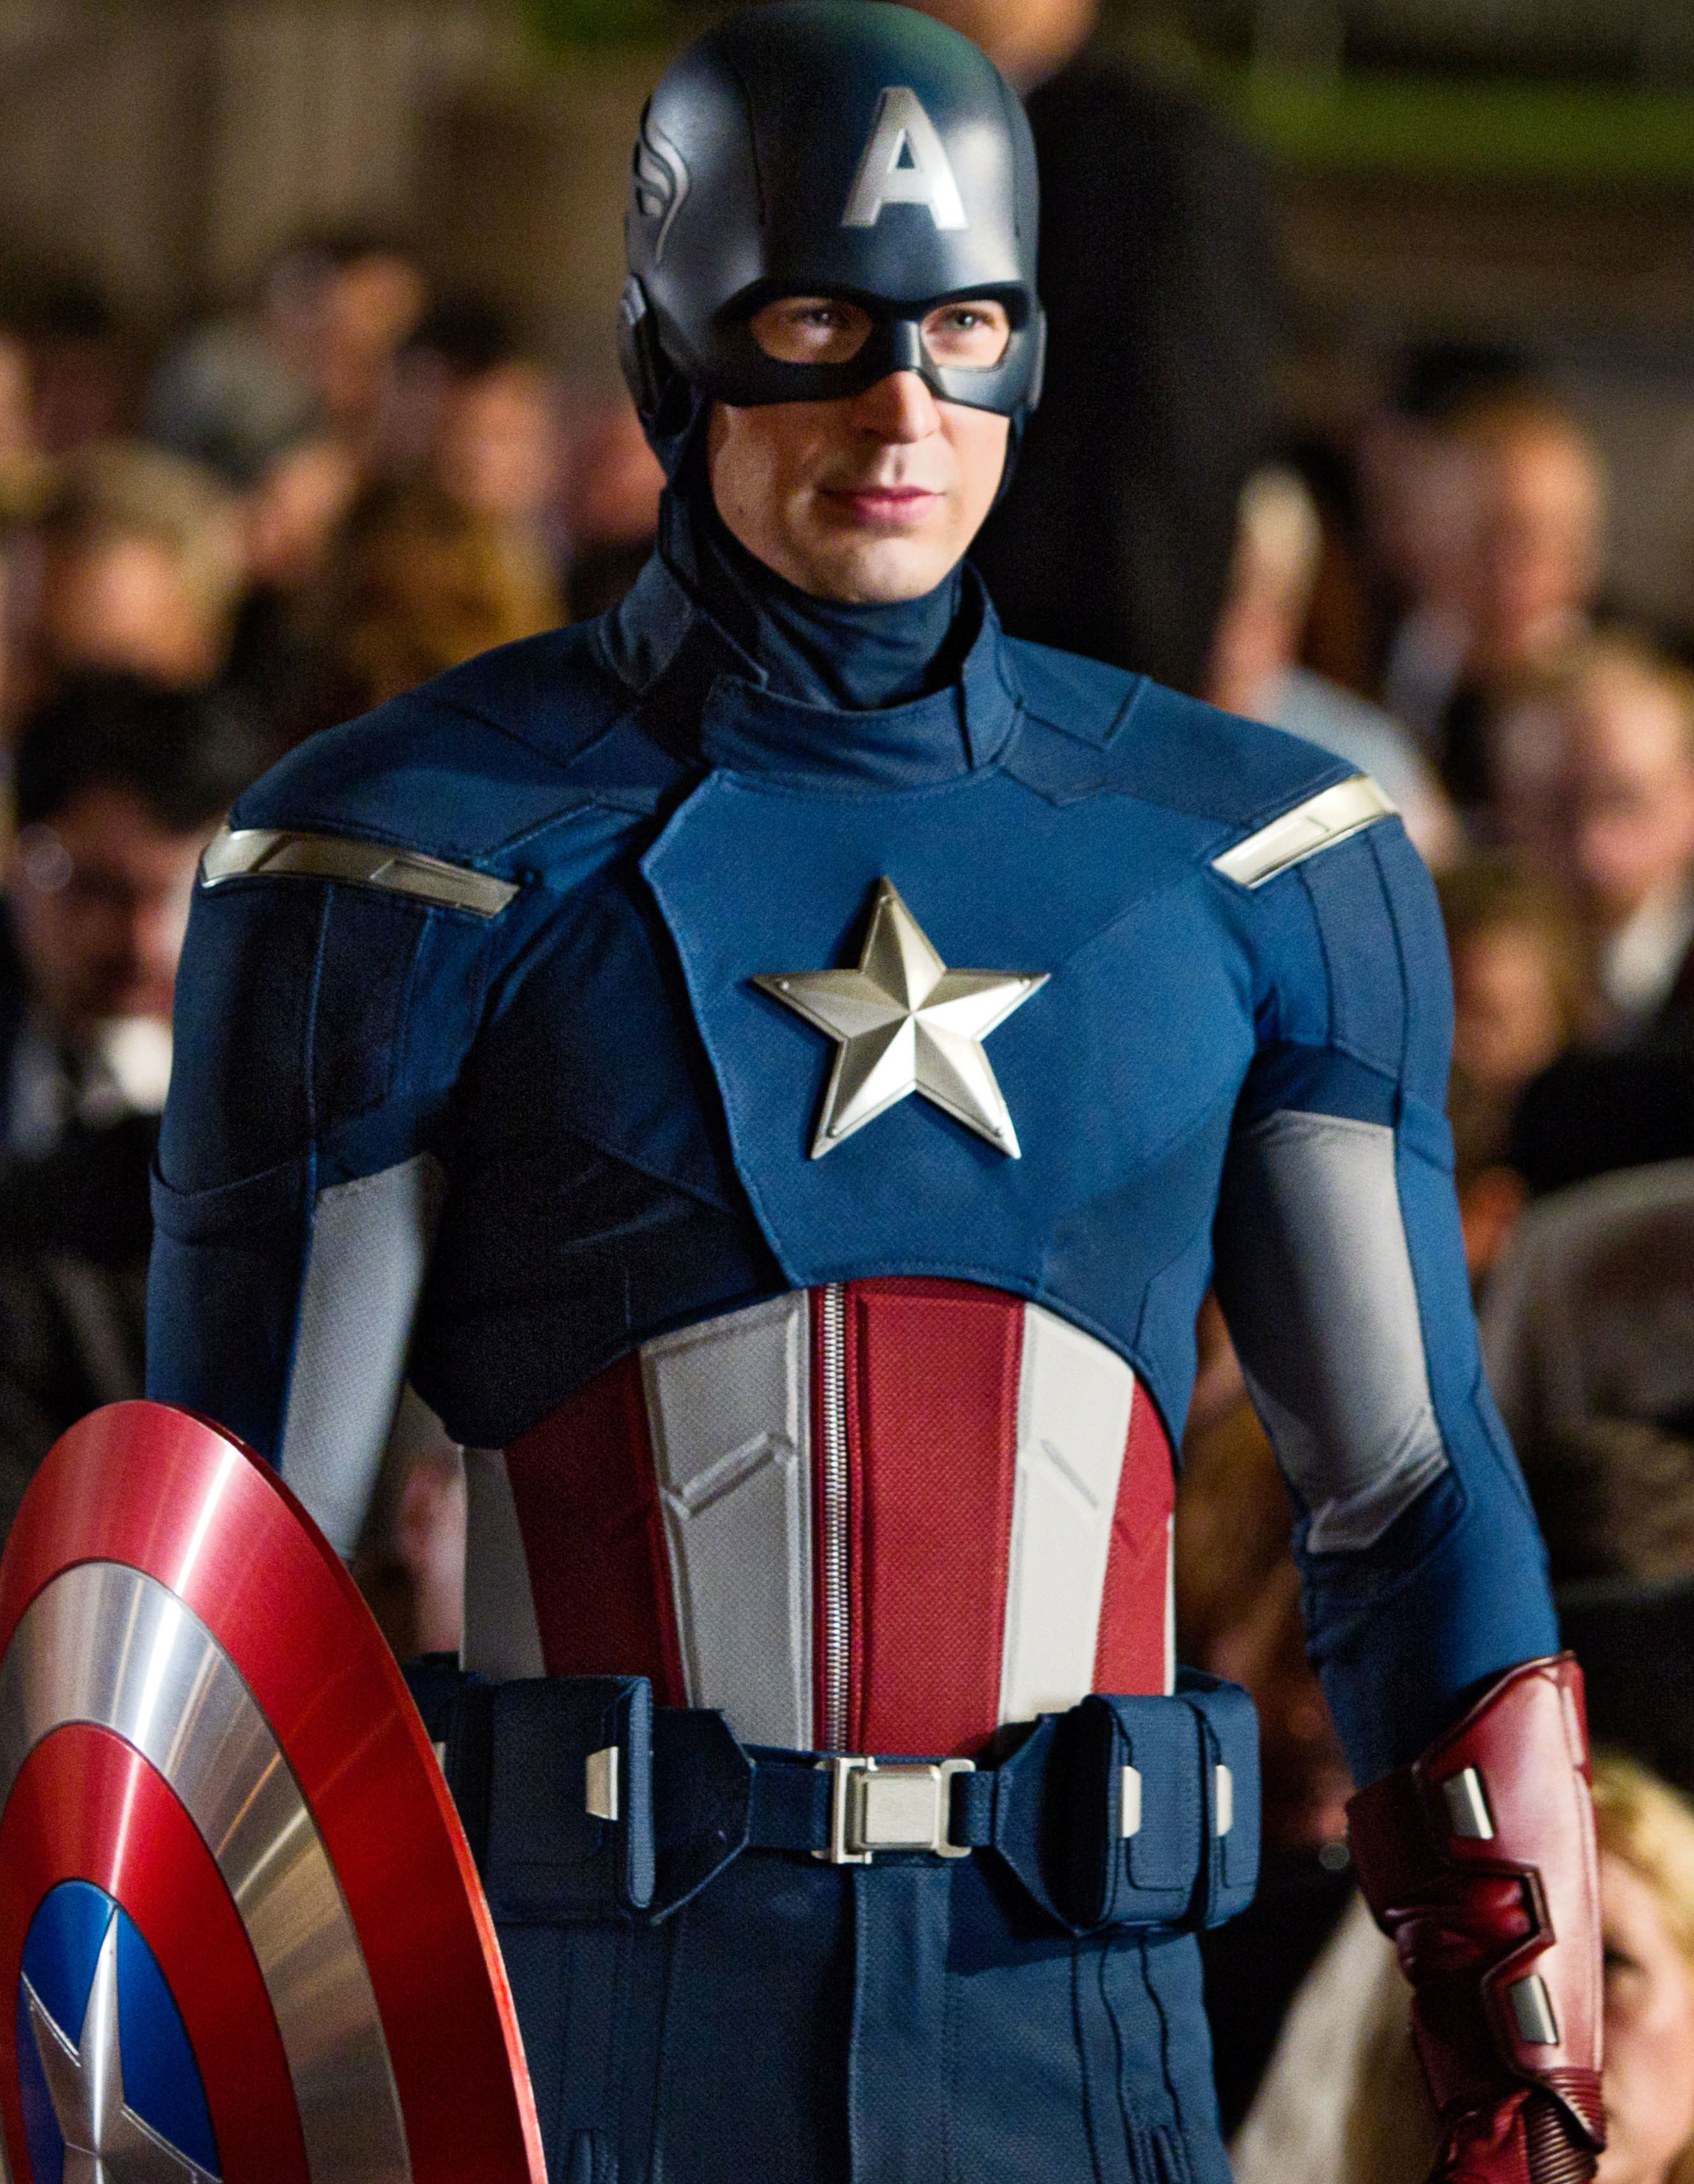 Evans as Captain America